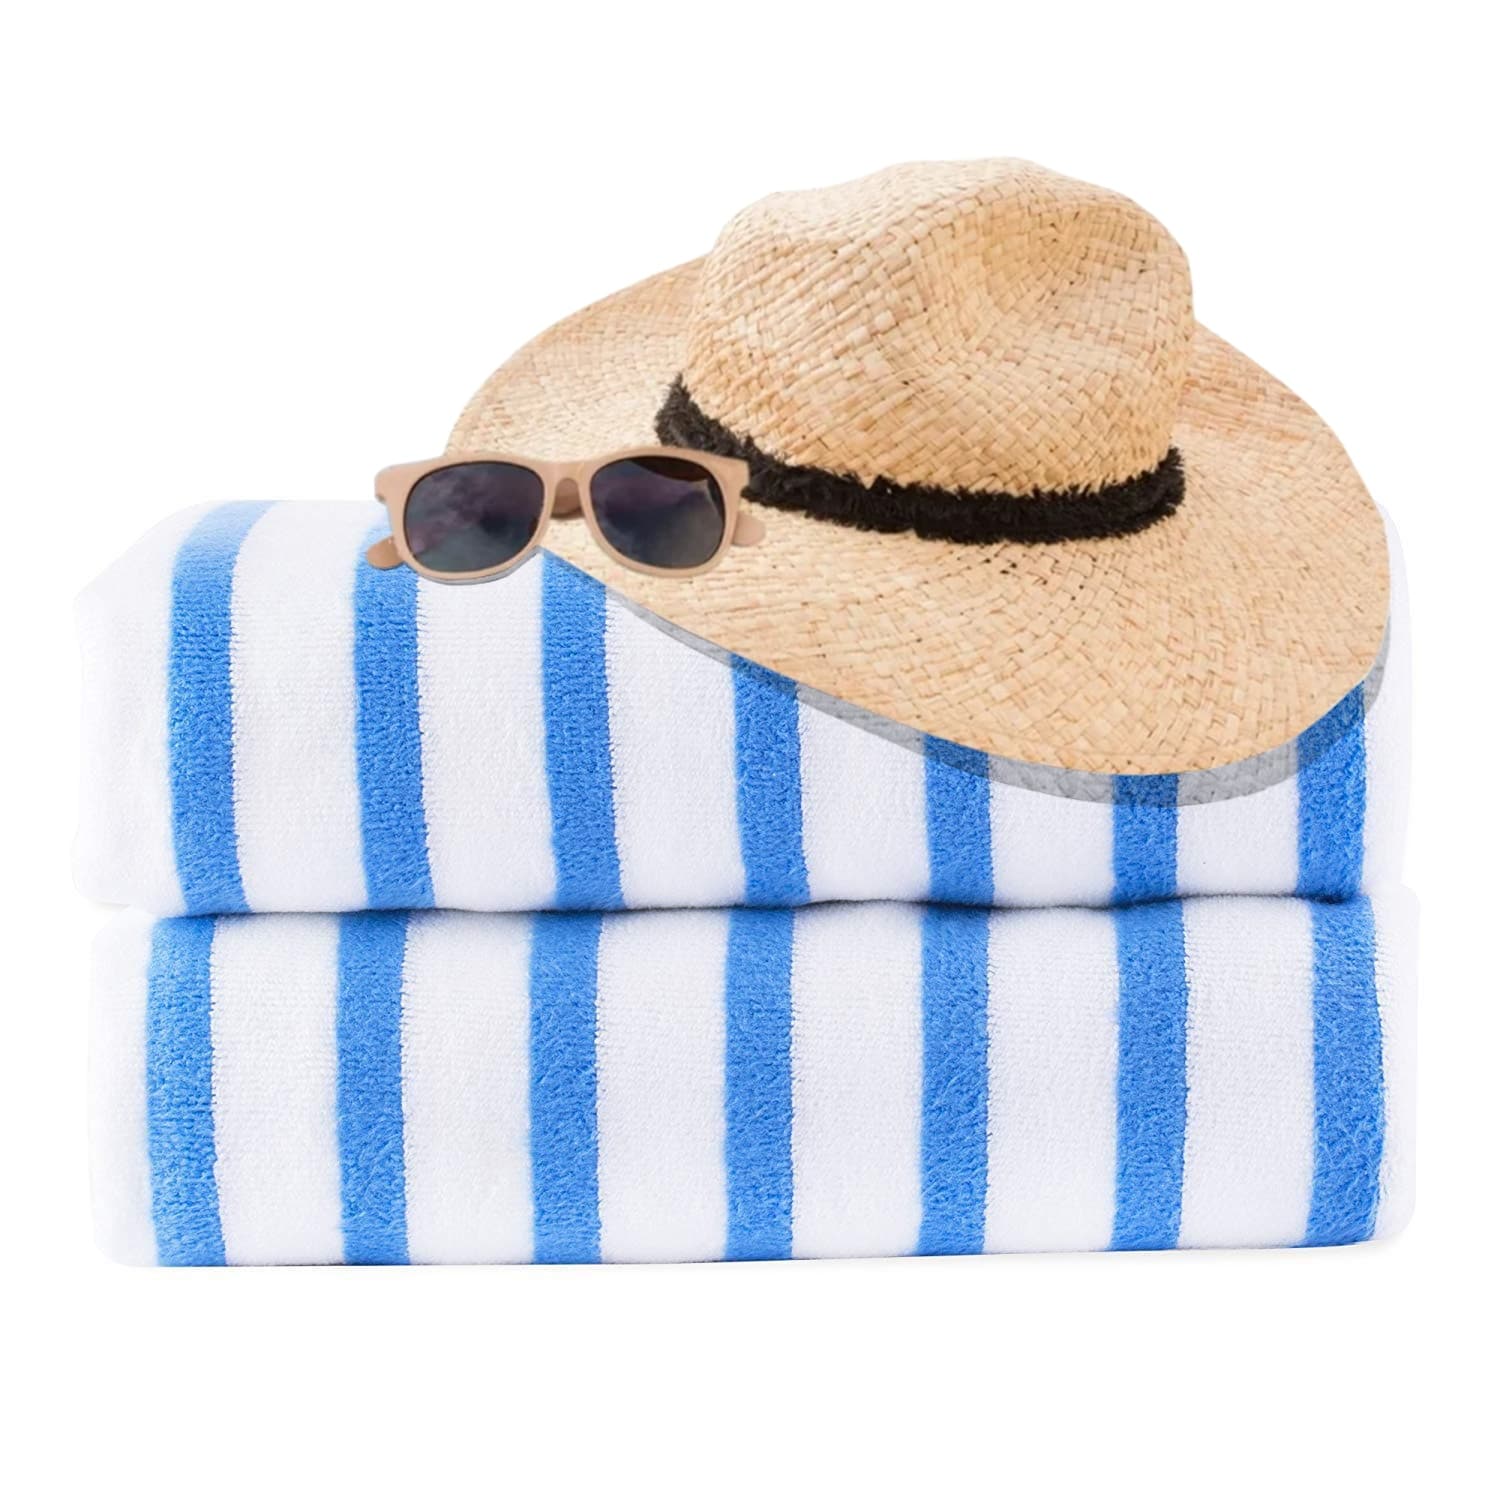 Beach Towels, Large Beach Towels & Pool Towels